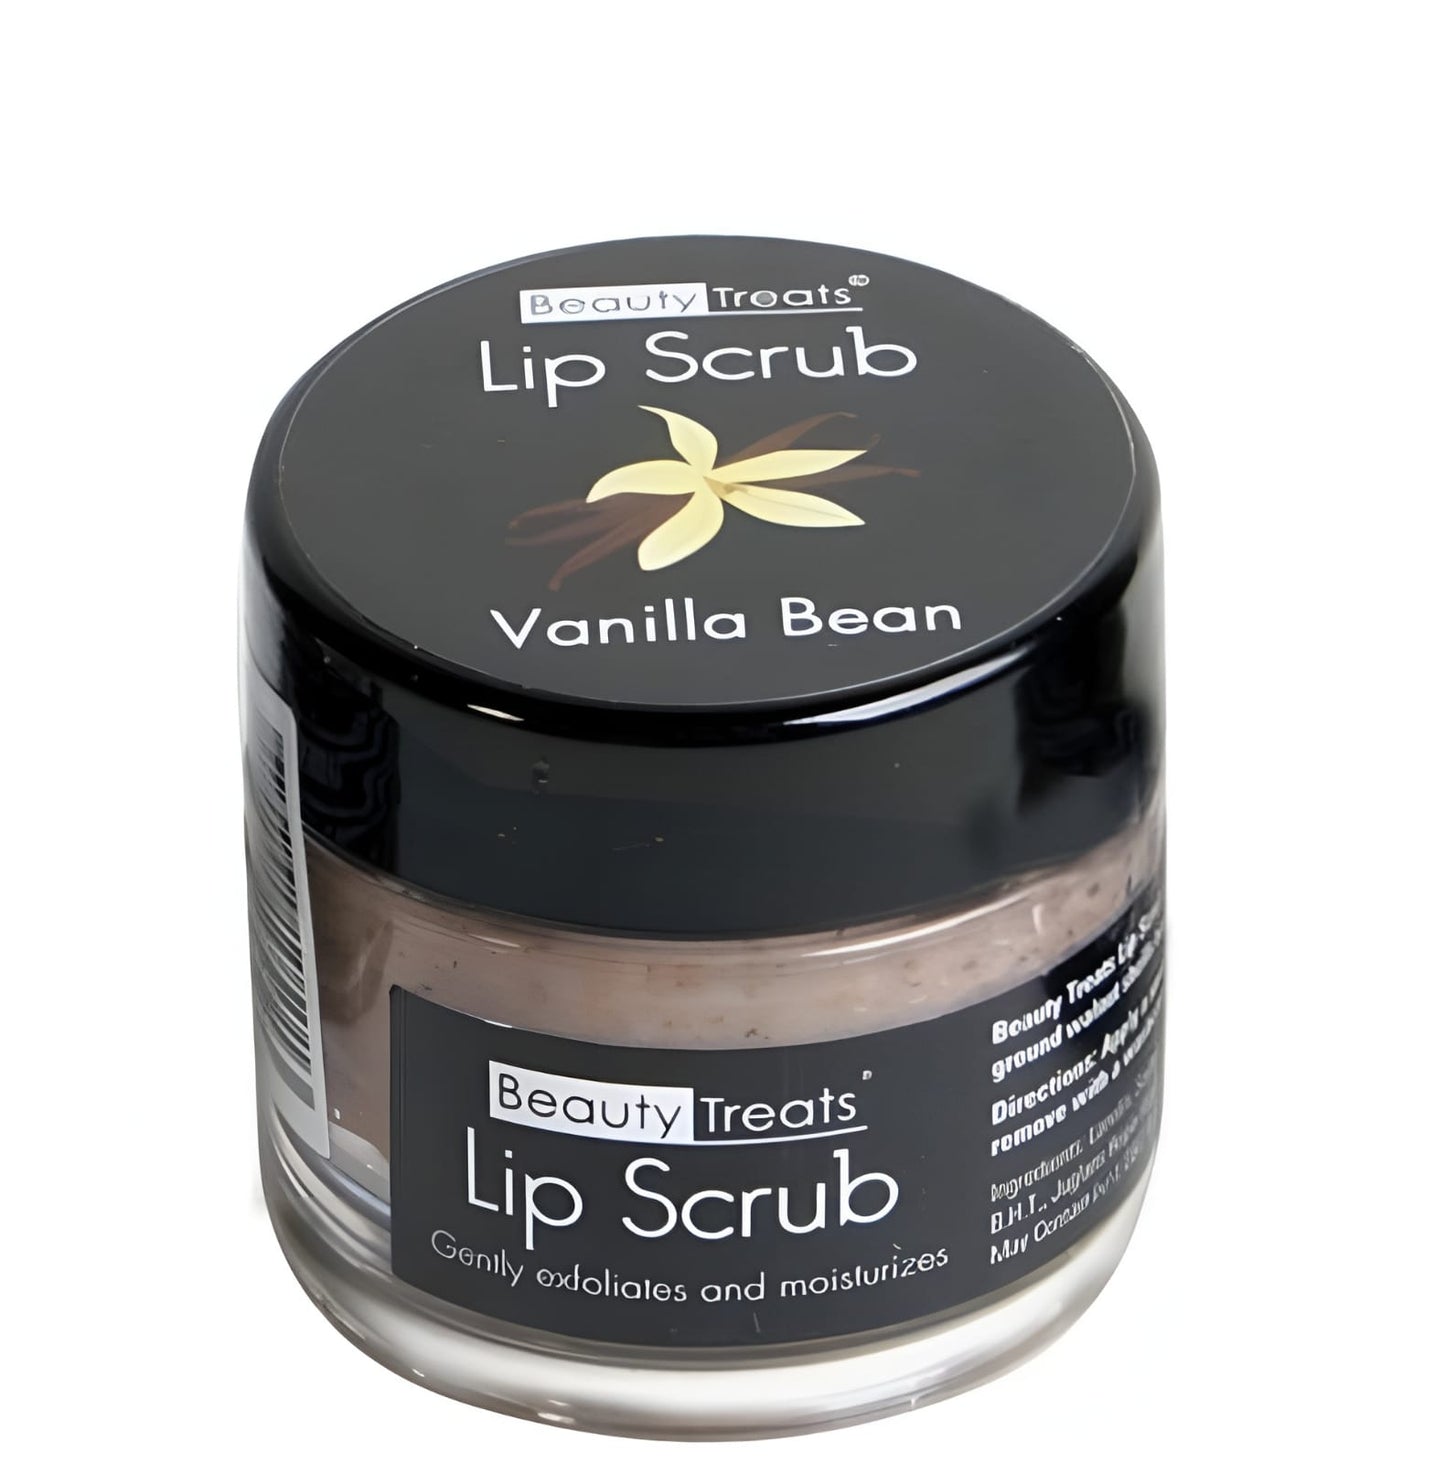 Beauty Treats Lip Scrub - Lip Treatment , Vitamin E, Moisturize Lips!